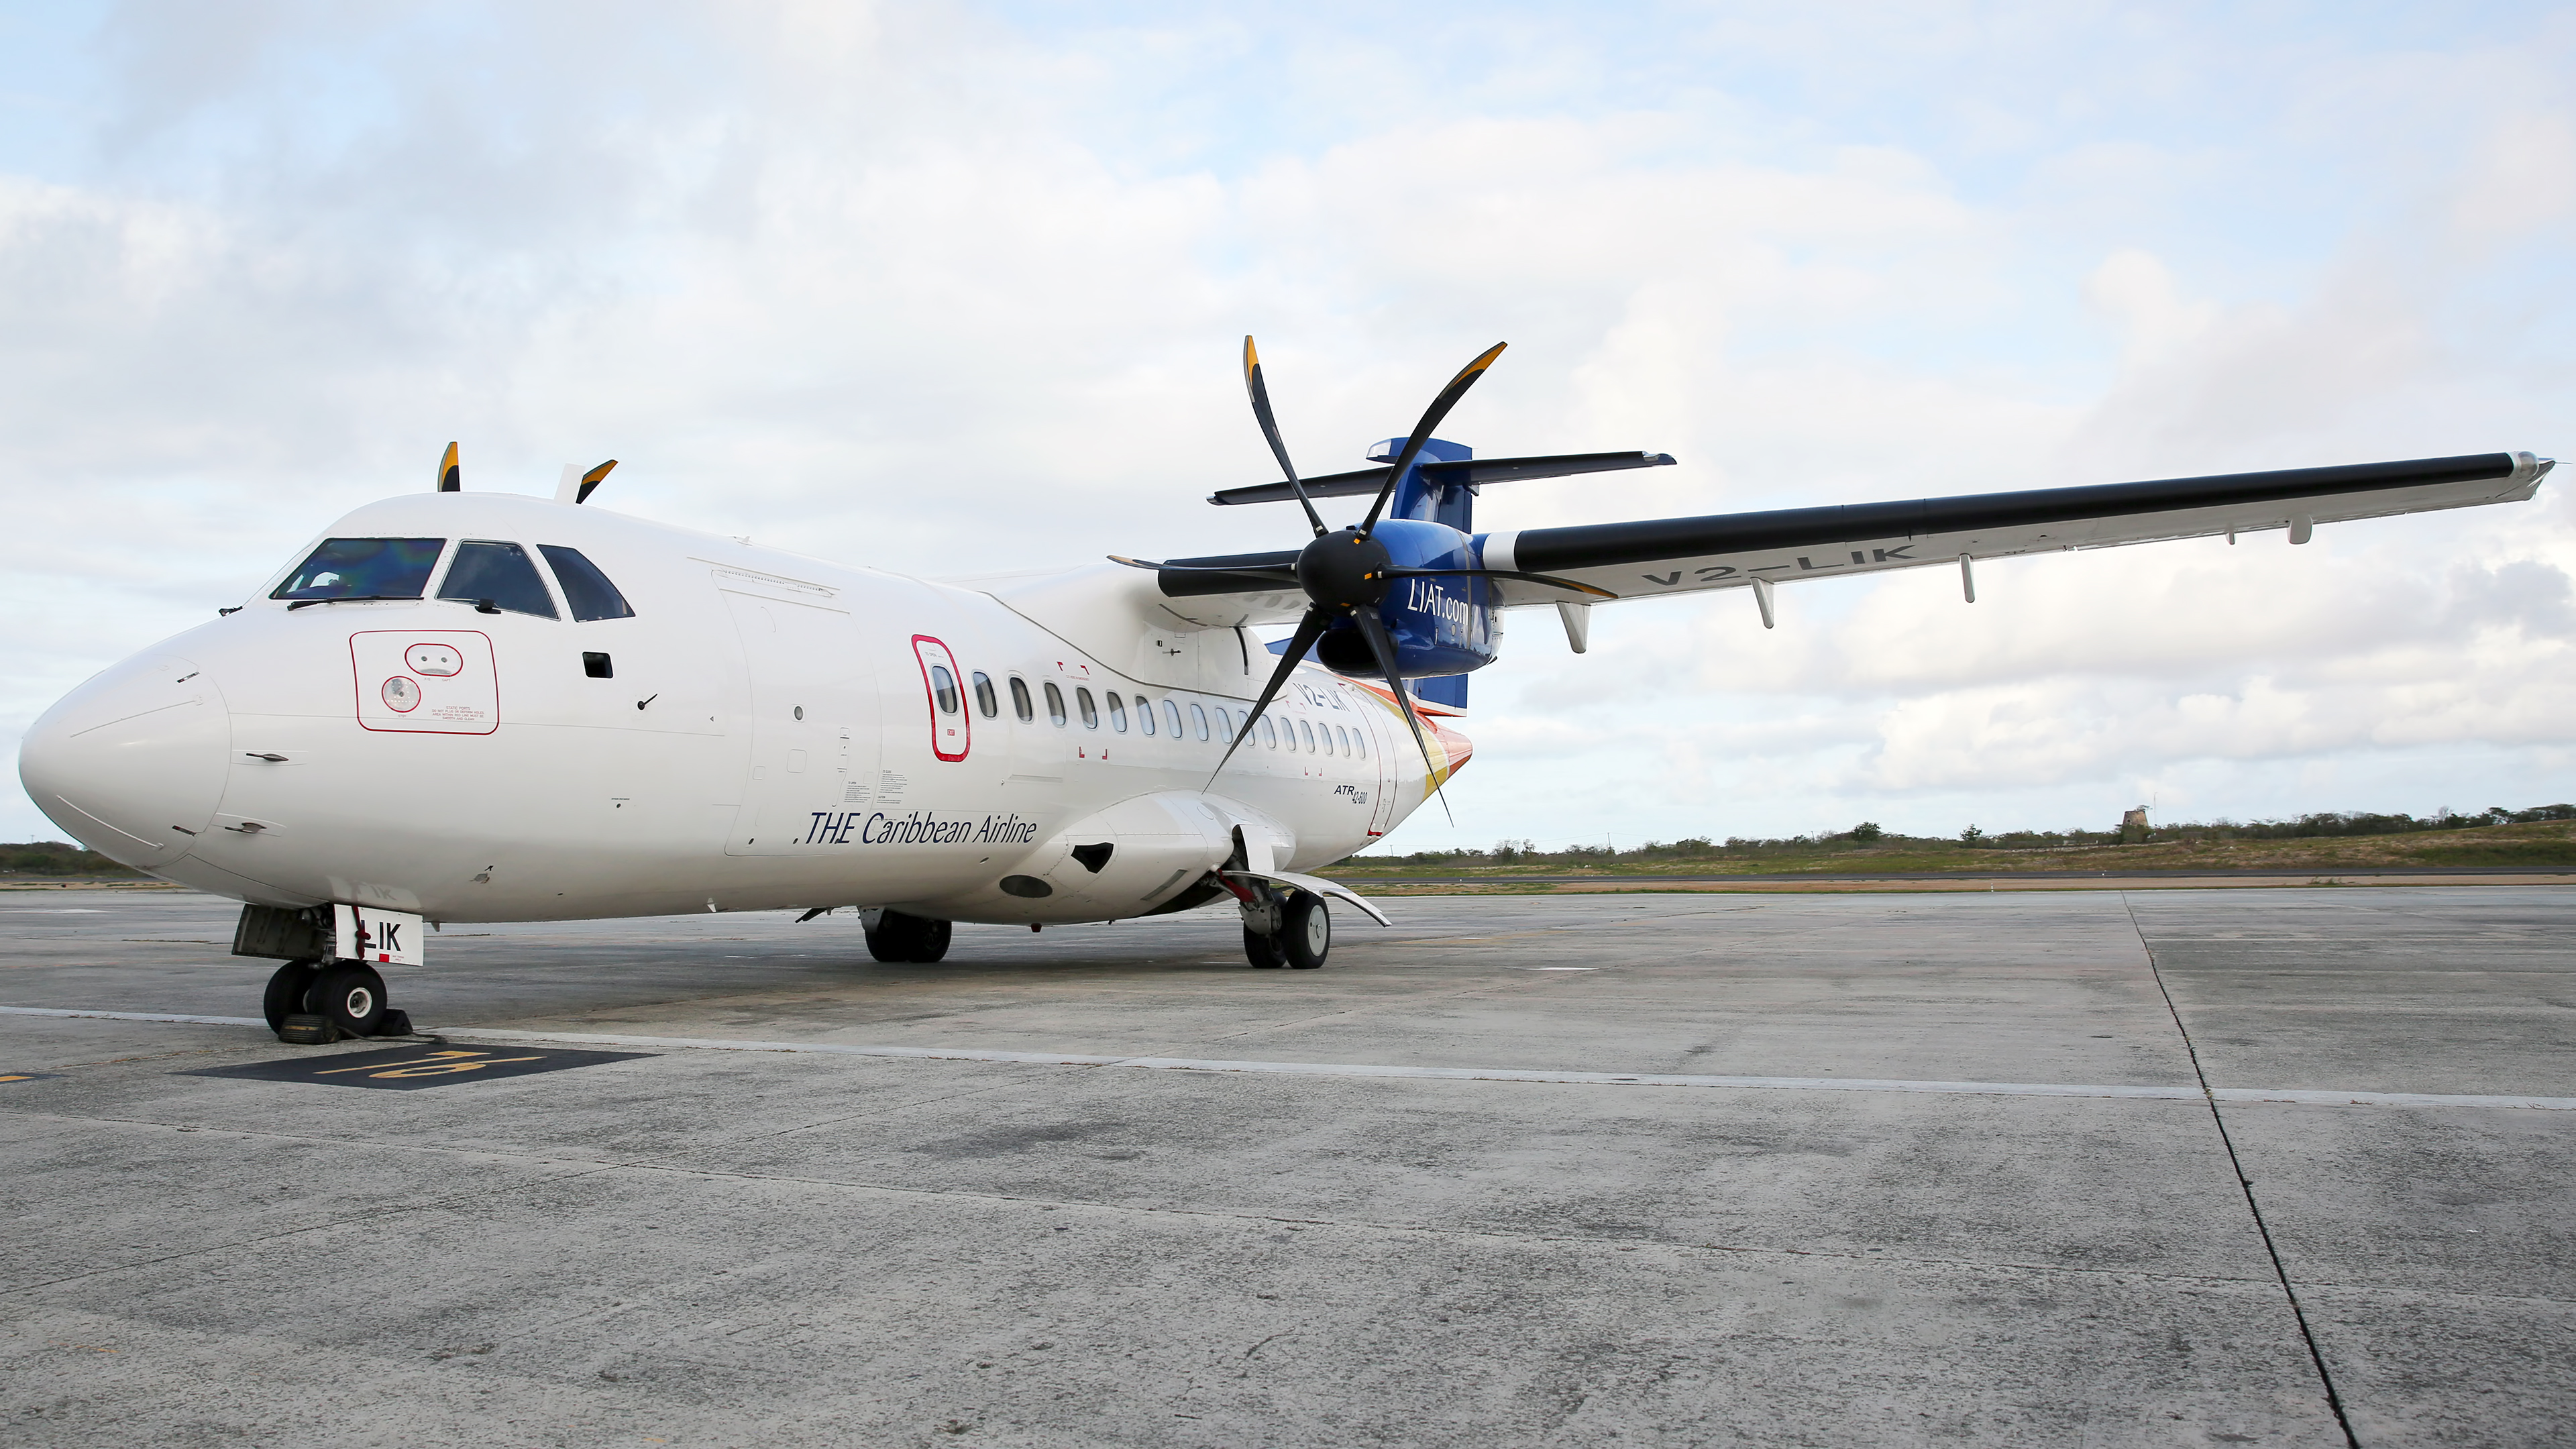 ATR 42 Airplane Aircraft LiAT Airline Transport Turboprop ATR Antigua Airport 3840x2160